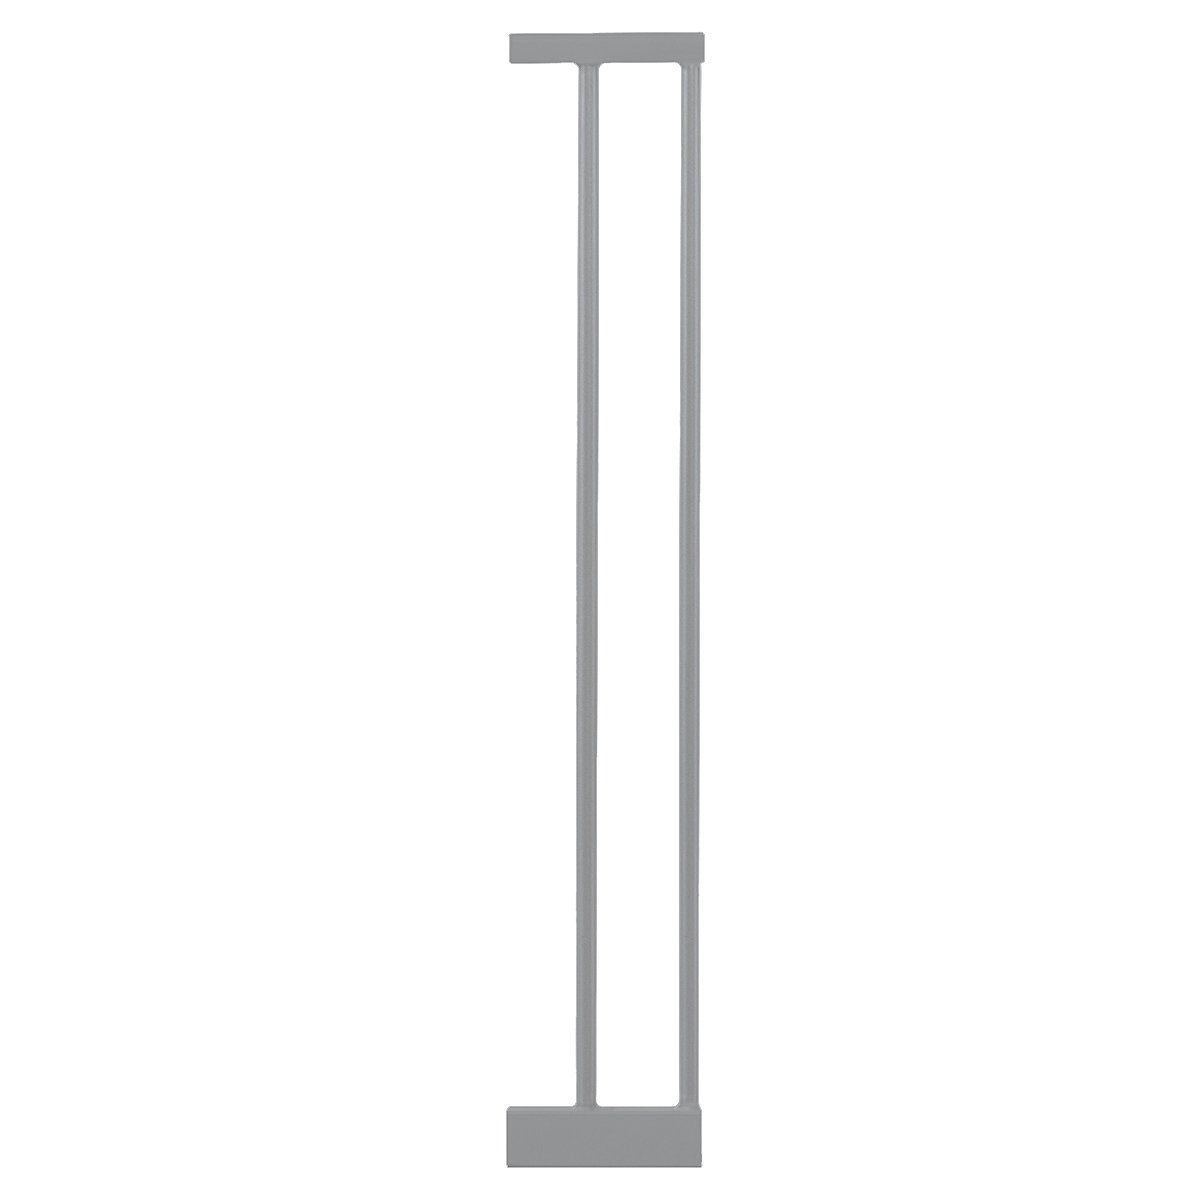 Munchkin Universal Silver Extension Επέκταση για Πόρτα Ασφαλείας 1 Τεμάχιο - 14 cm